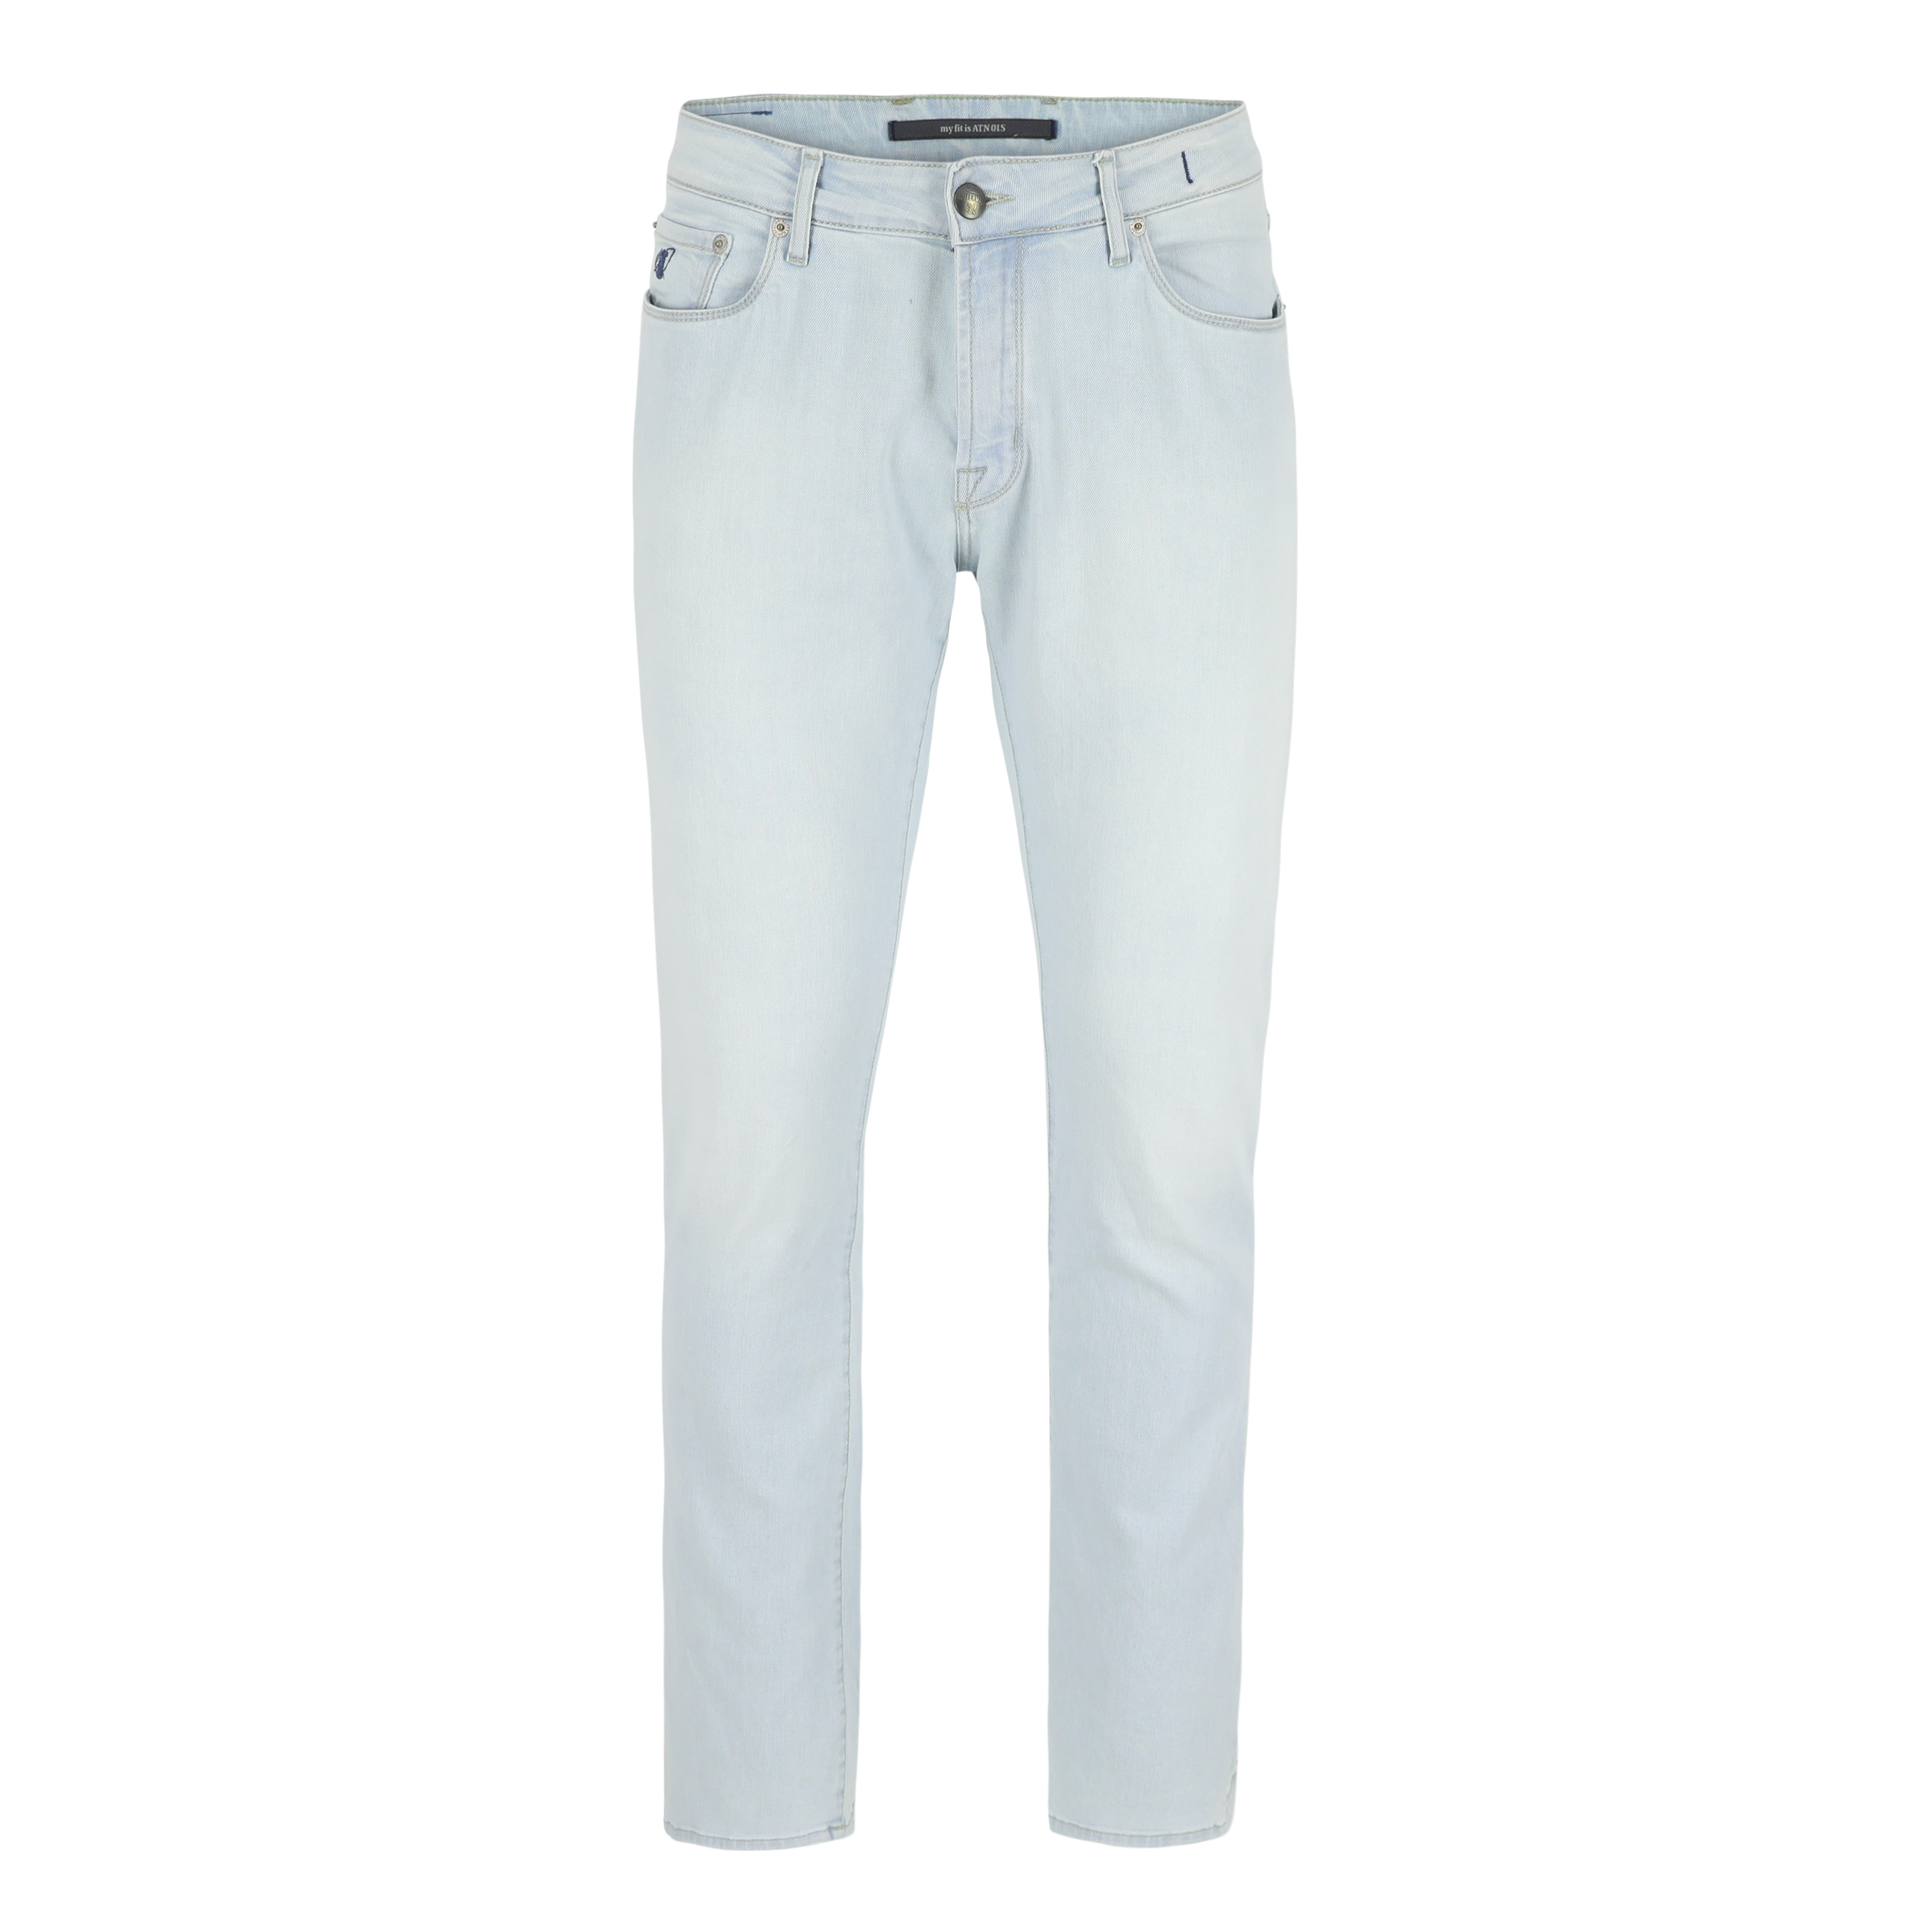 Atelier Noterman - jeans in blauwe denim in used wassing - 32/34 - Heren